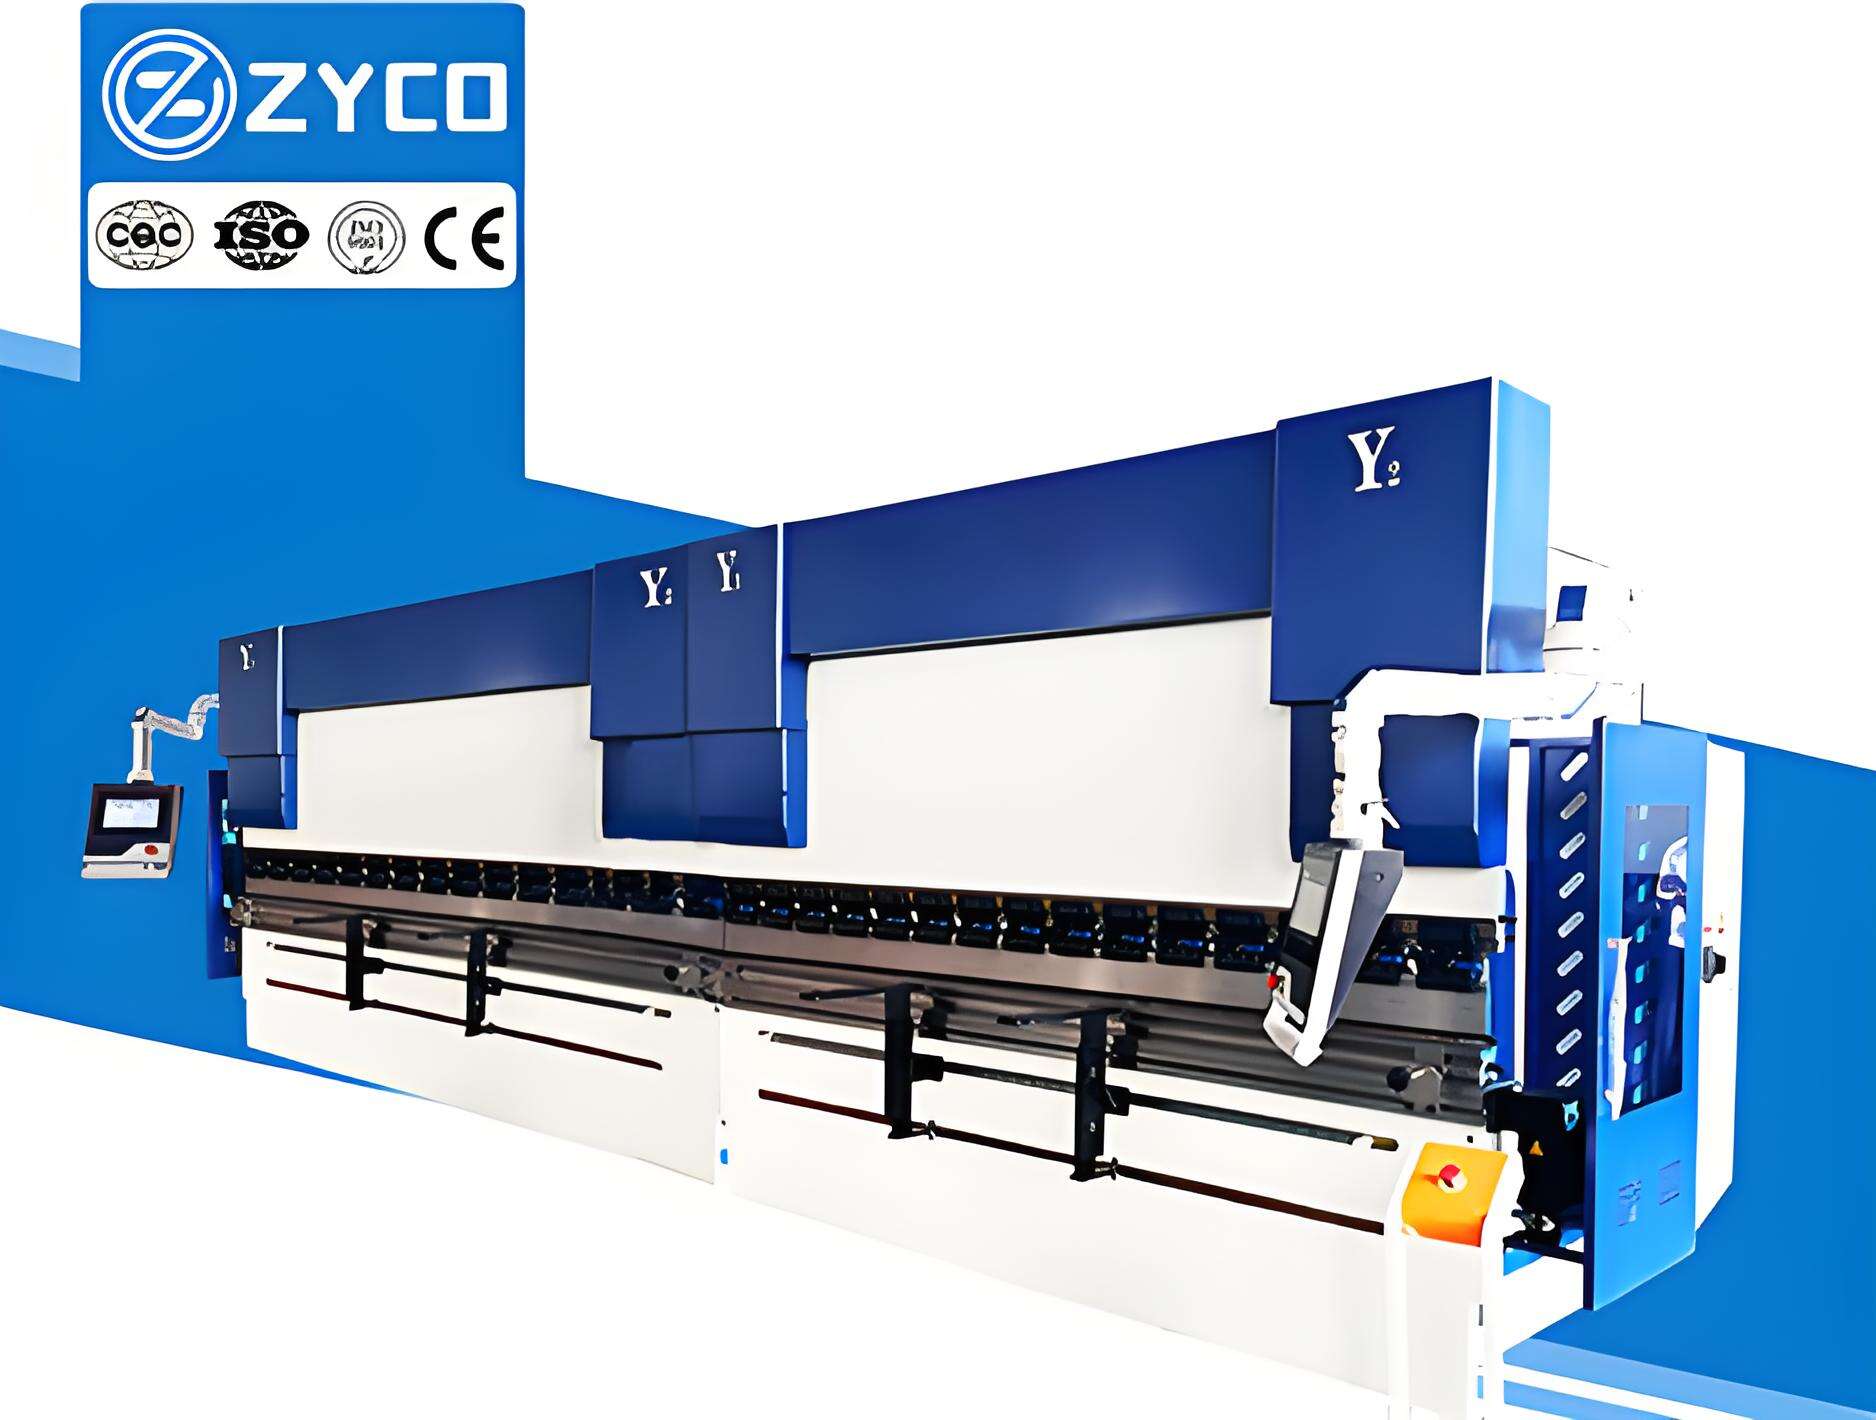 Dual-machine linkage Electro-hydraulic Press Brake - The key technology to improve metal processing efficiency